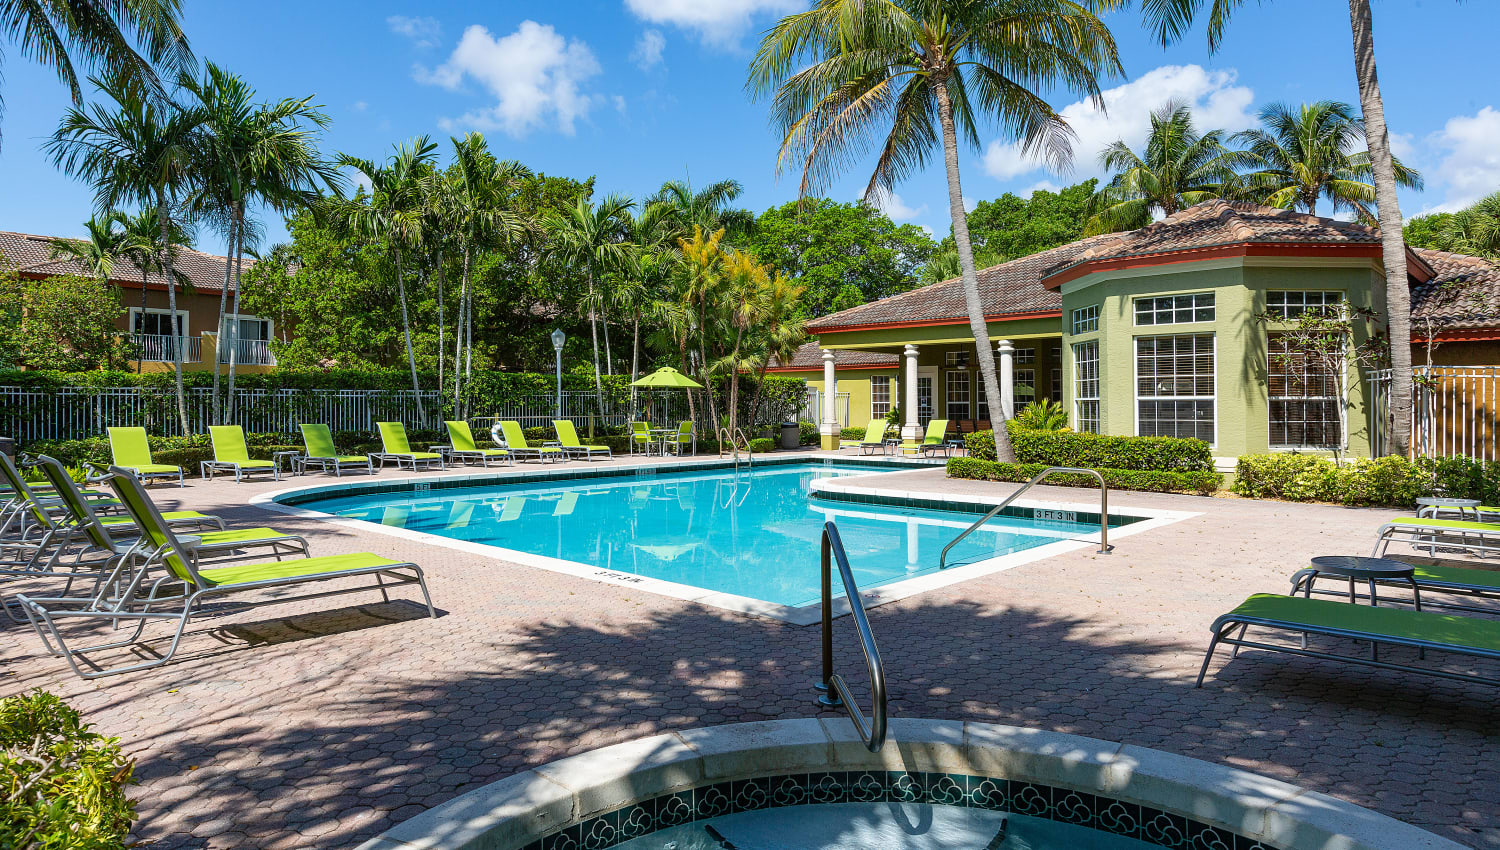 Pool and spa at Delray Bay Apartments in Delray Beach, Florida